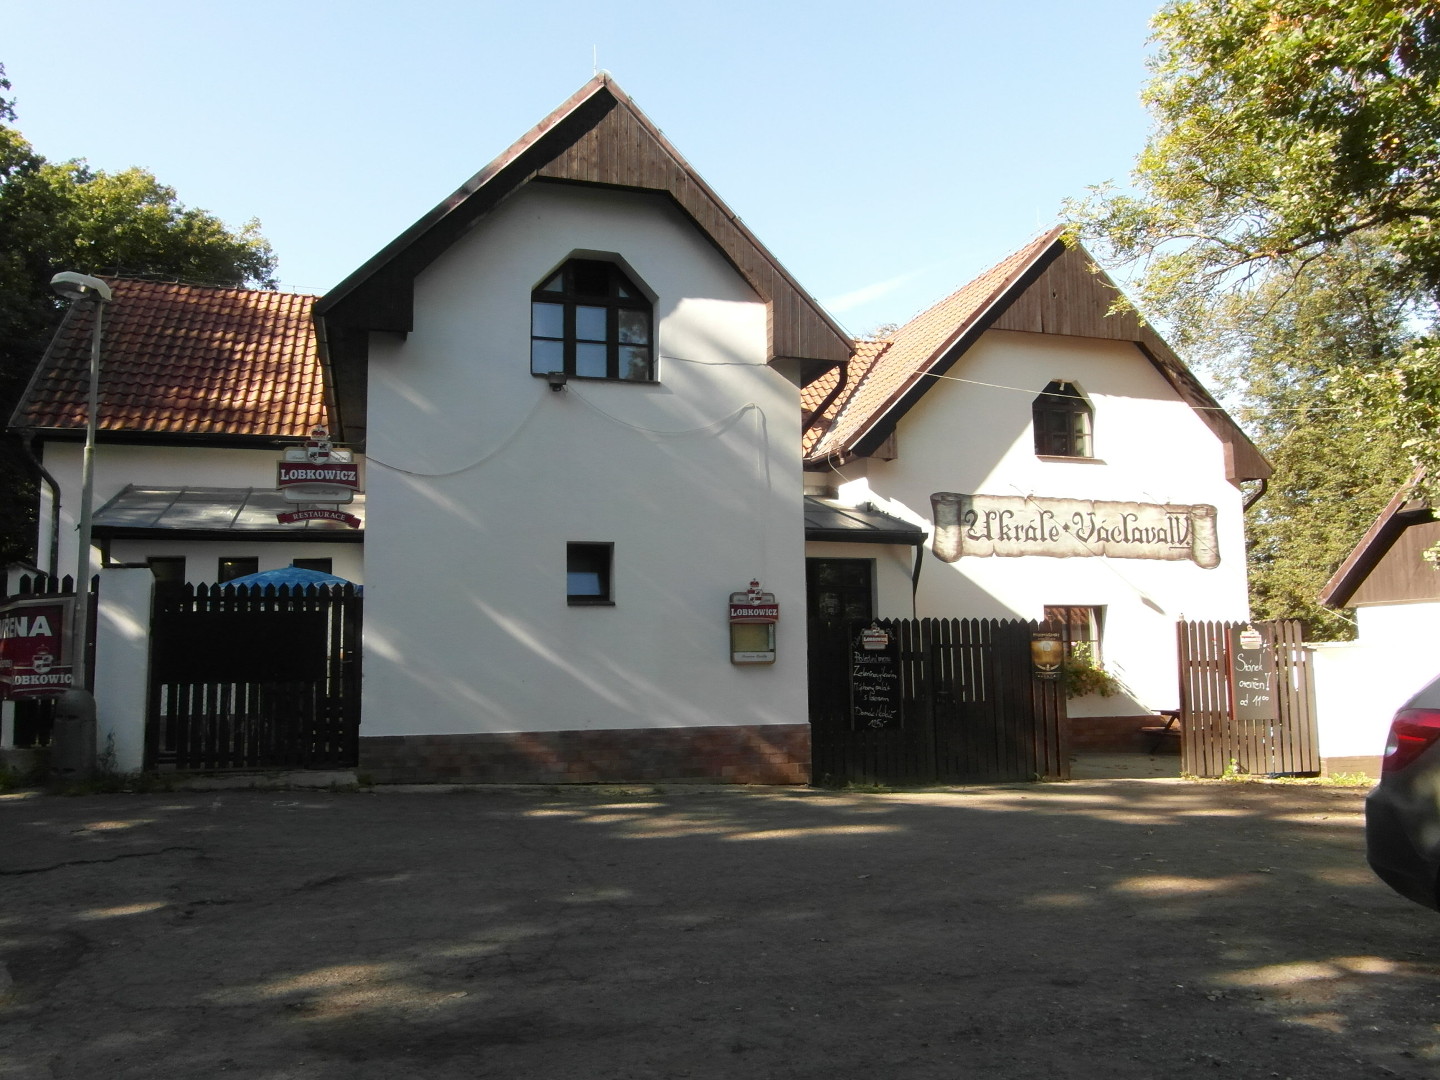 Na fotografii z vletu je restaurace U Krle Vclava IV. Je vidt nzev restaurace, npis
  Lobkowicz (pivo), prostor ped restaurac a stromy.